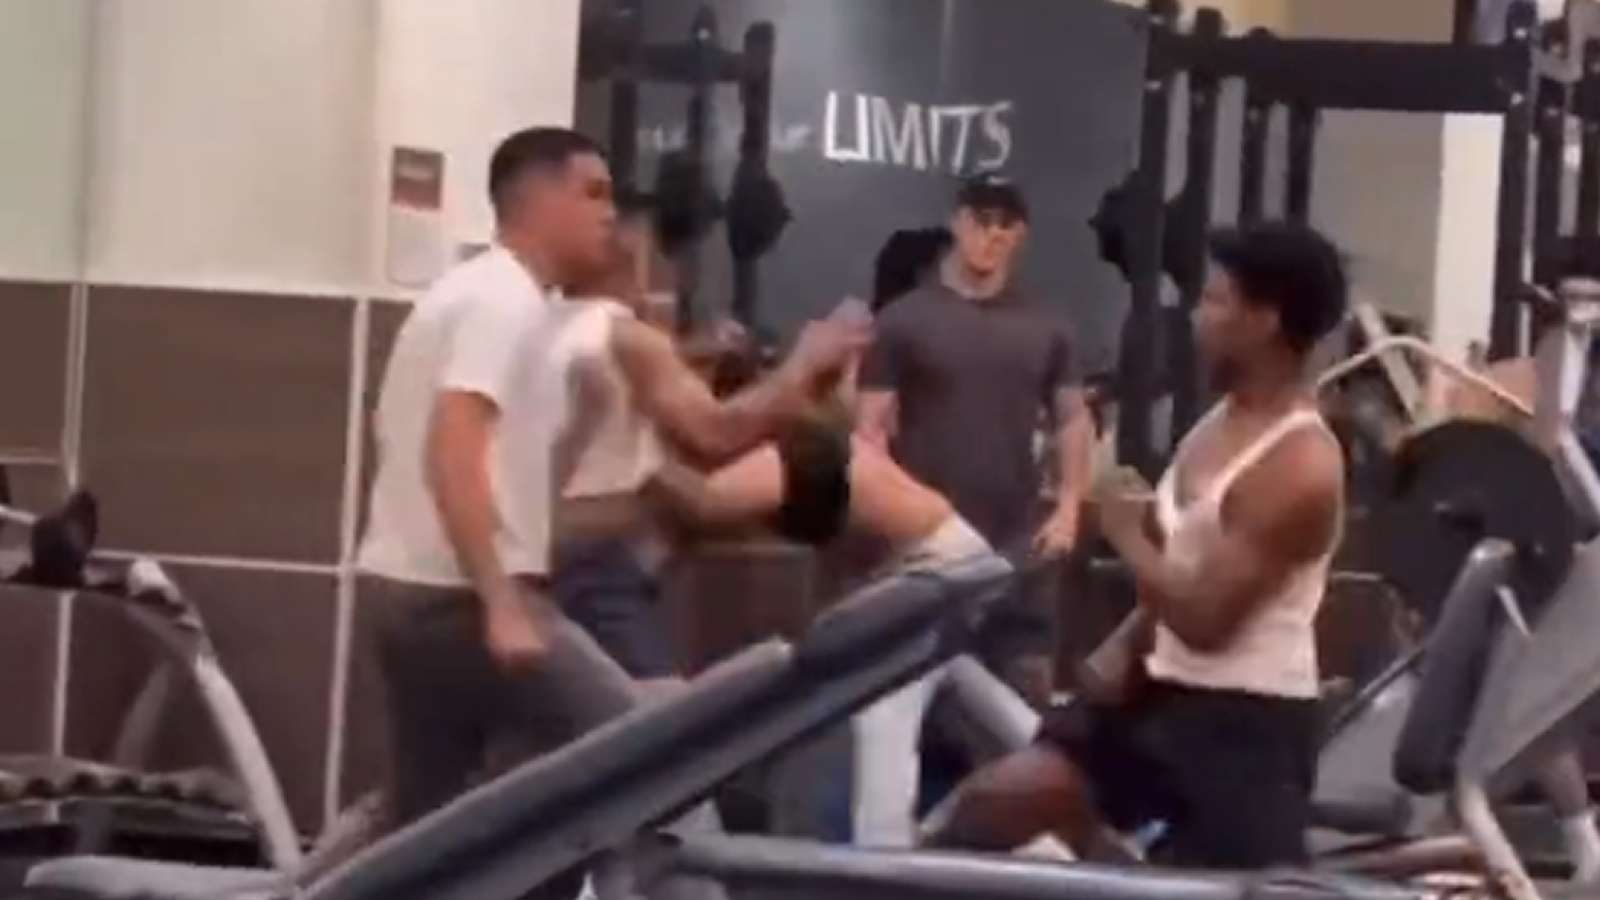 Violent gym fight goes viral as men brawl amongst workout equipment